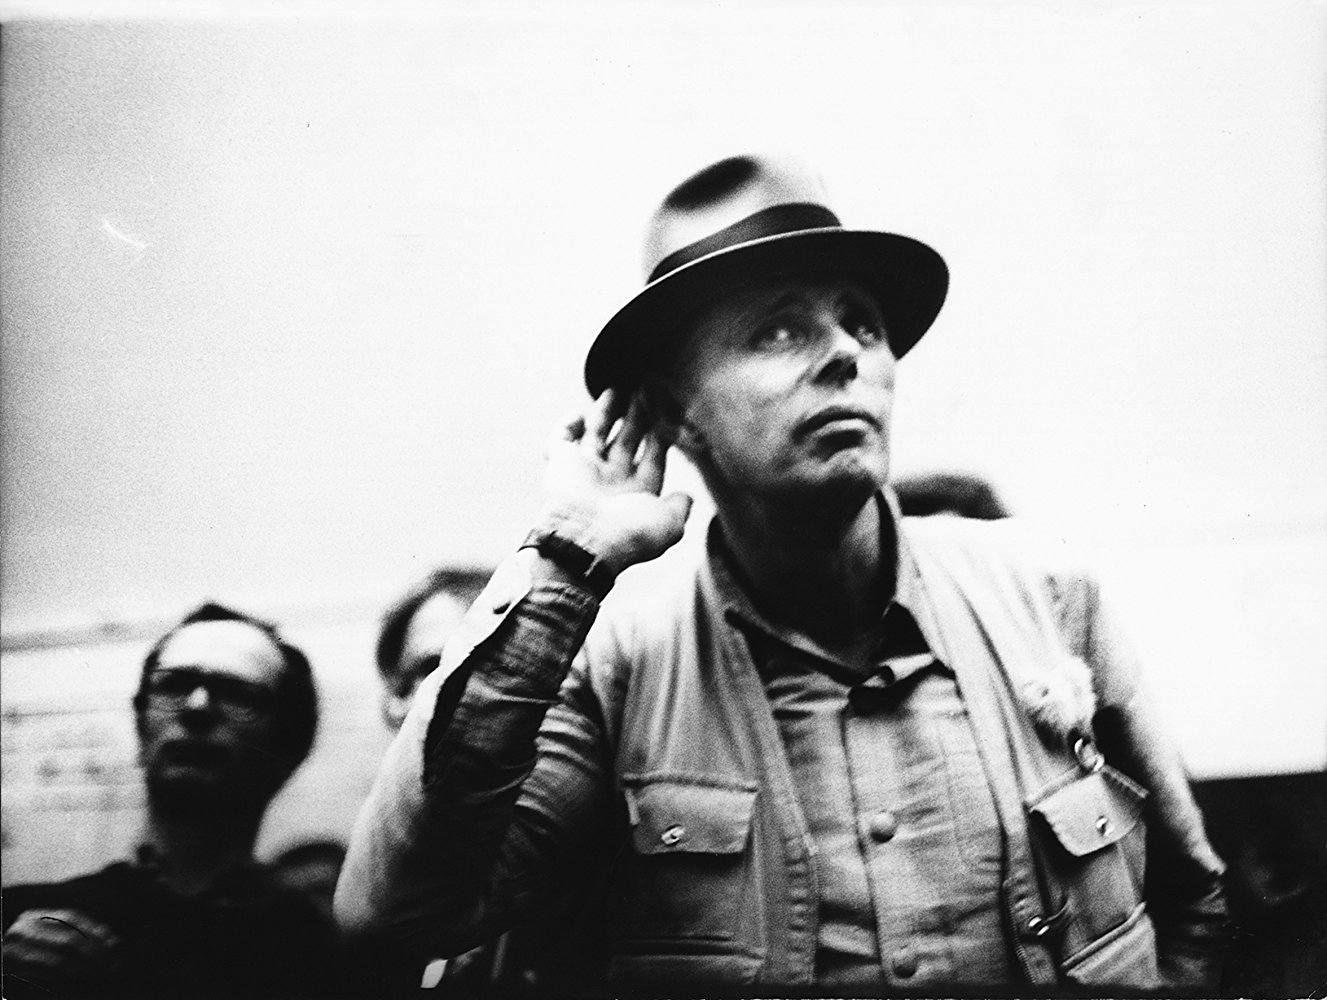 A photo of Joseph Beuys.